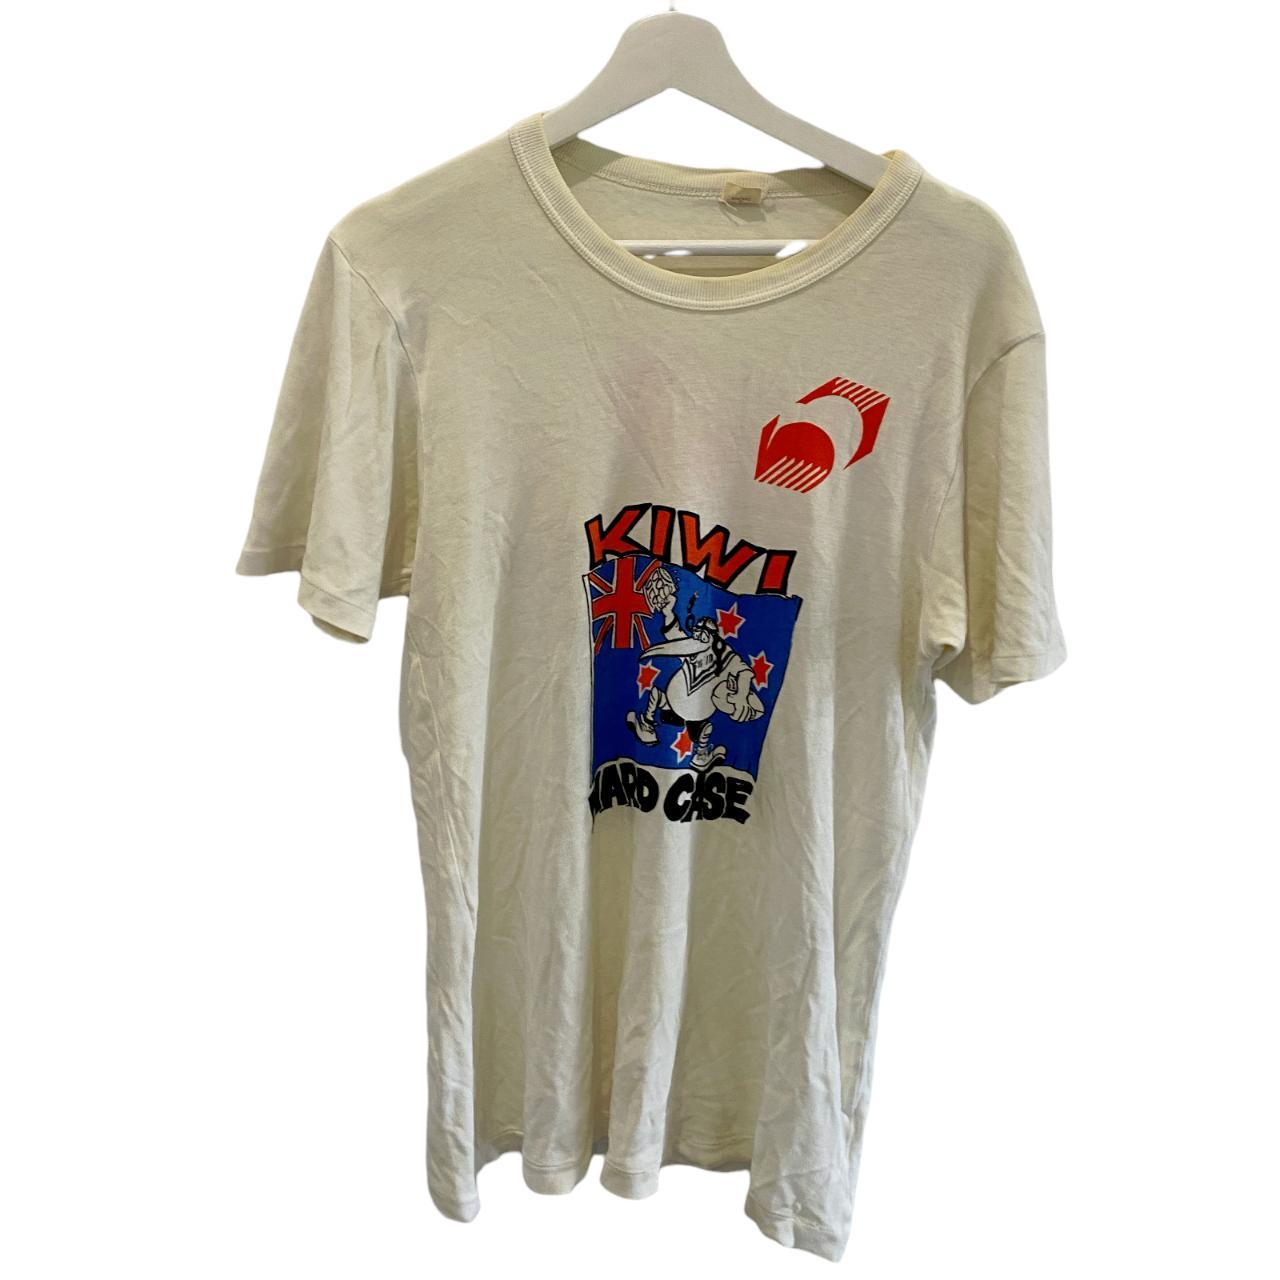 Kiwi Rugby 90s Single Stitch Vintage T-Shirt Men... - Depop